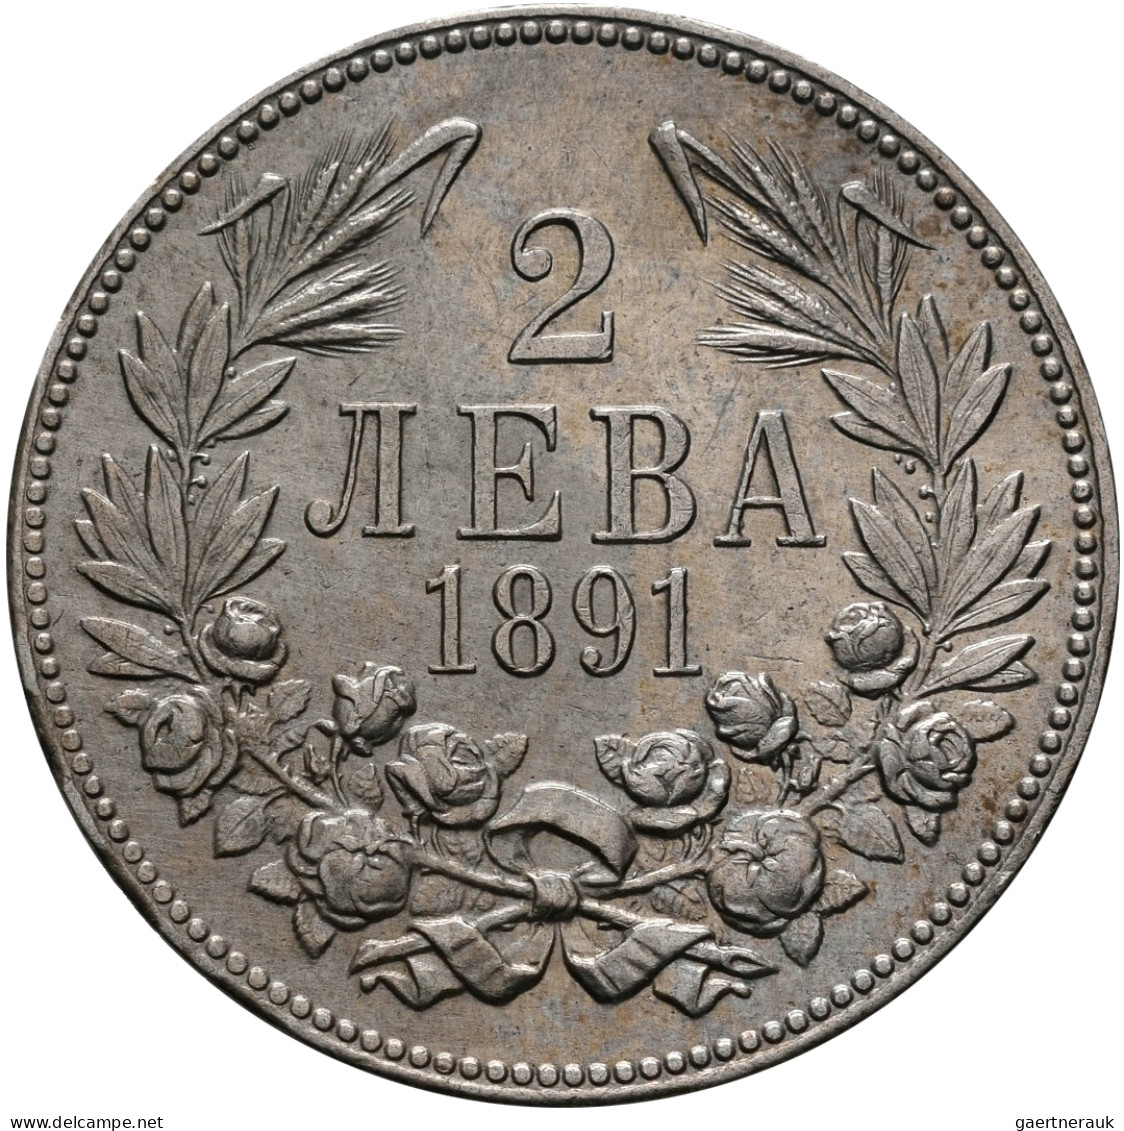 Bulgarien: Ferdinand I. 1887-1908: 2 Leva 1891, KM# 14, Vorzüglich. - Bulgarien